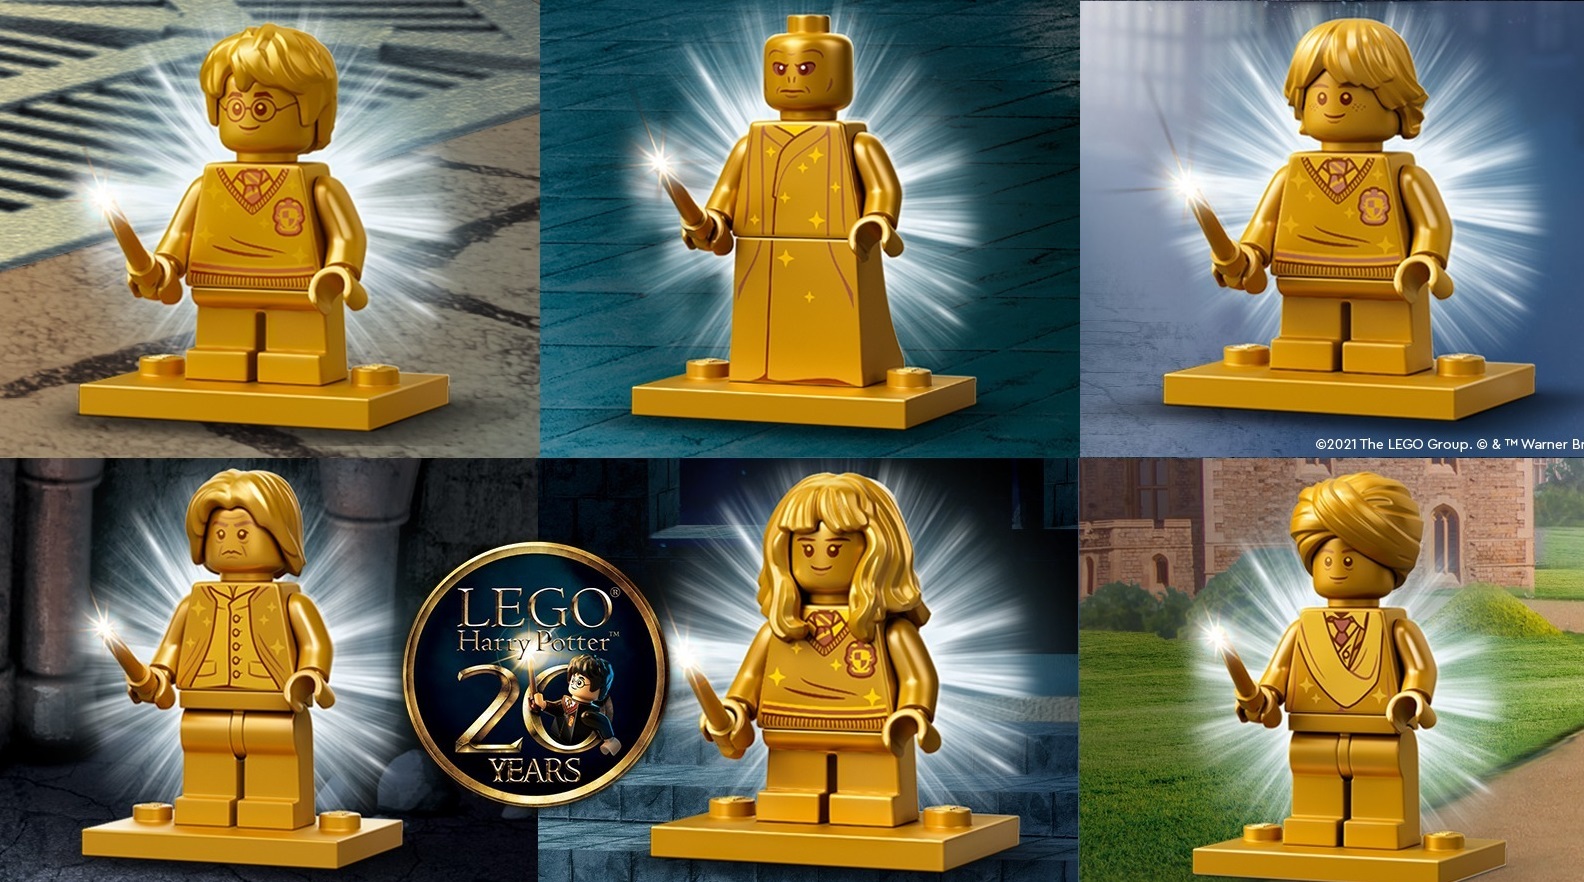 LEGO Harry Potter 20th Anniversary Golden Minifigures full set of 6 BRAND NEW